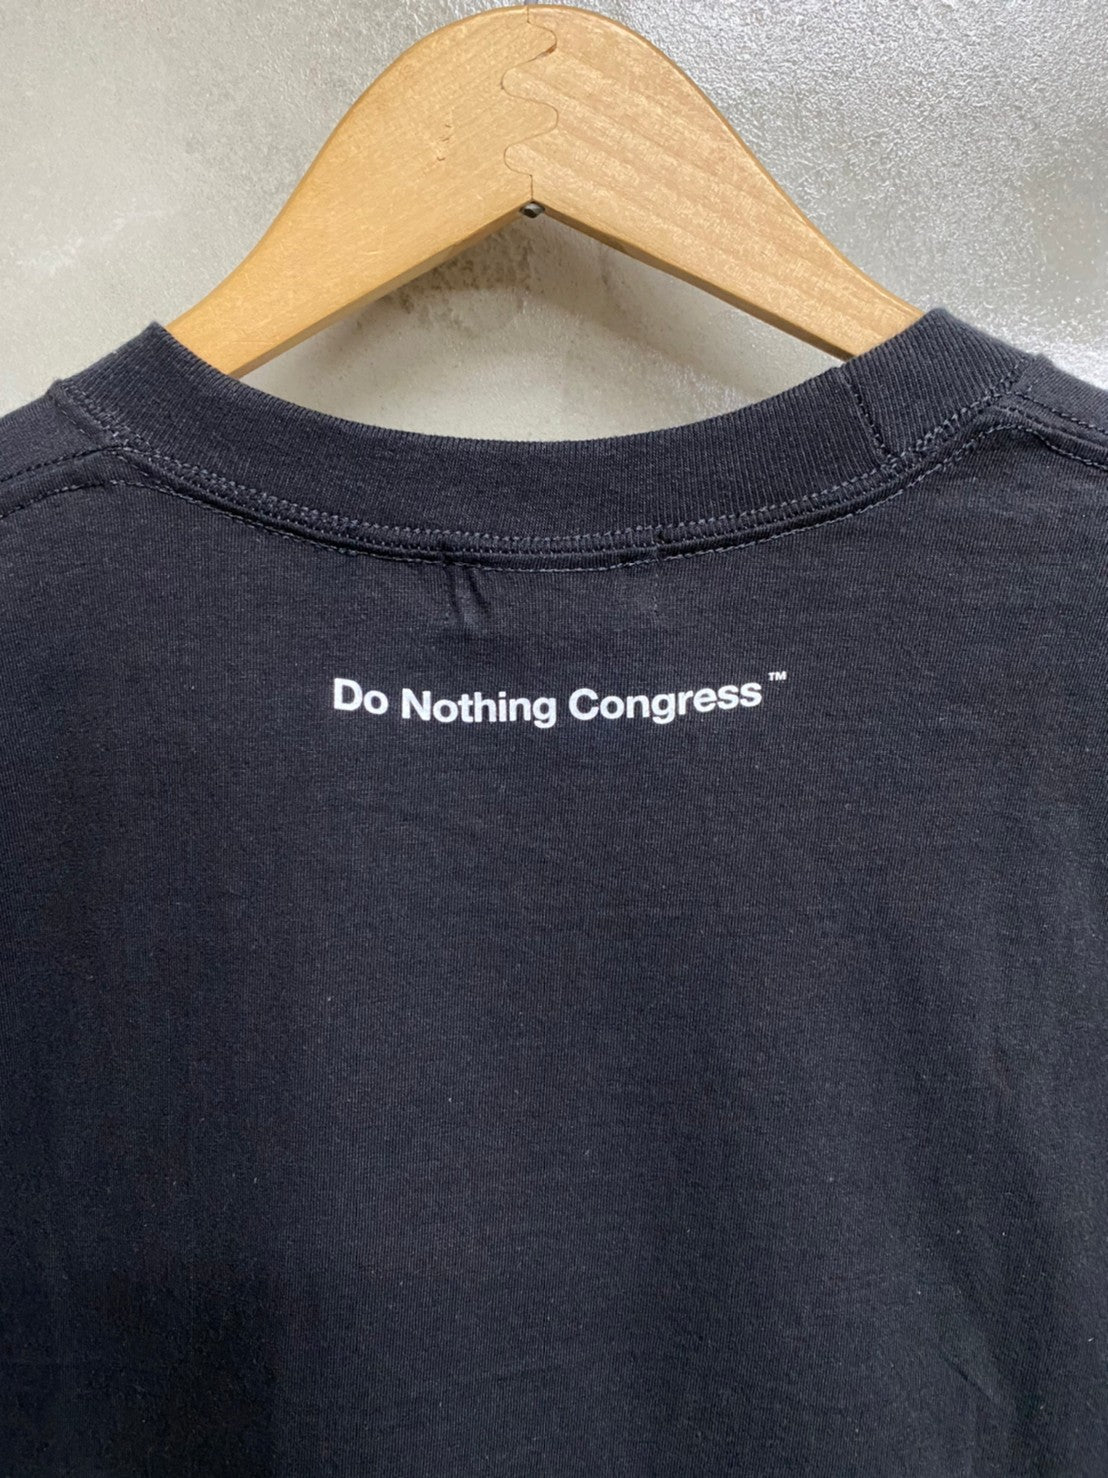 do nothing congress 長袖 tシャツ fragment - Tシャツ